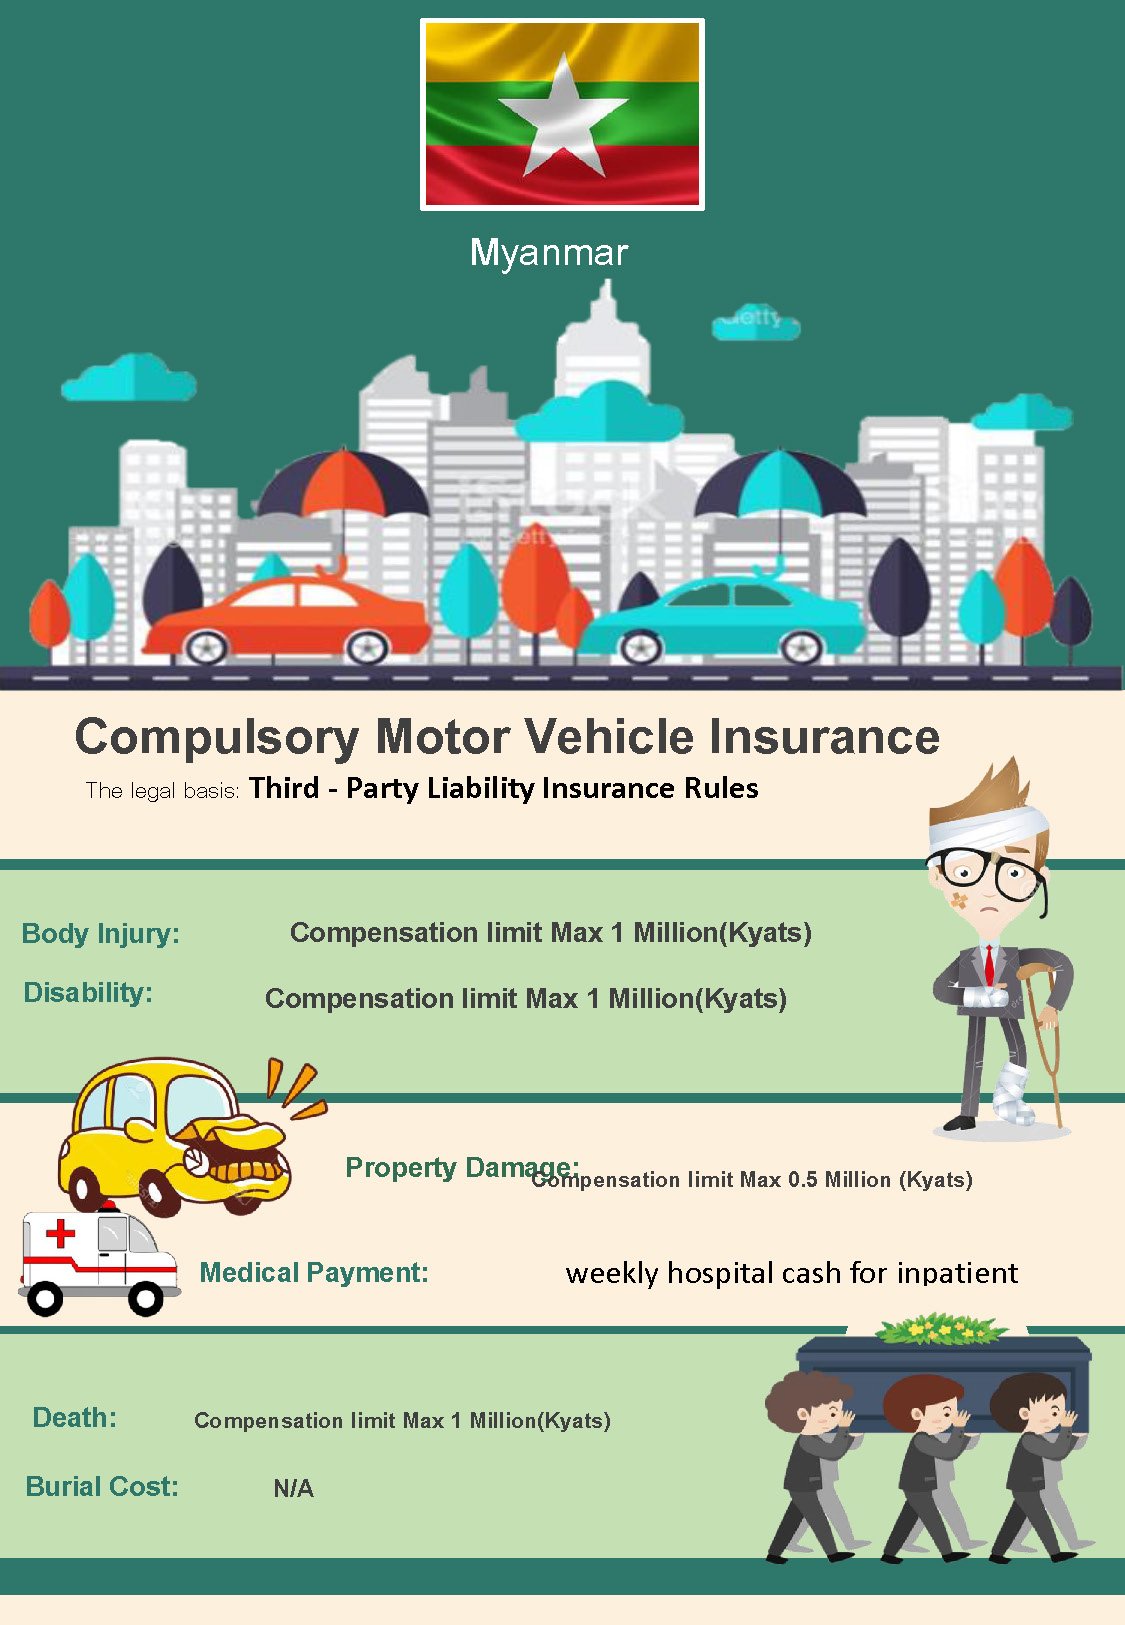 Compulsory Motor Insurance coverage information of Myanmar